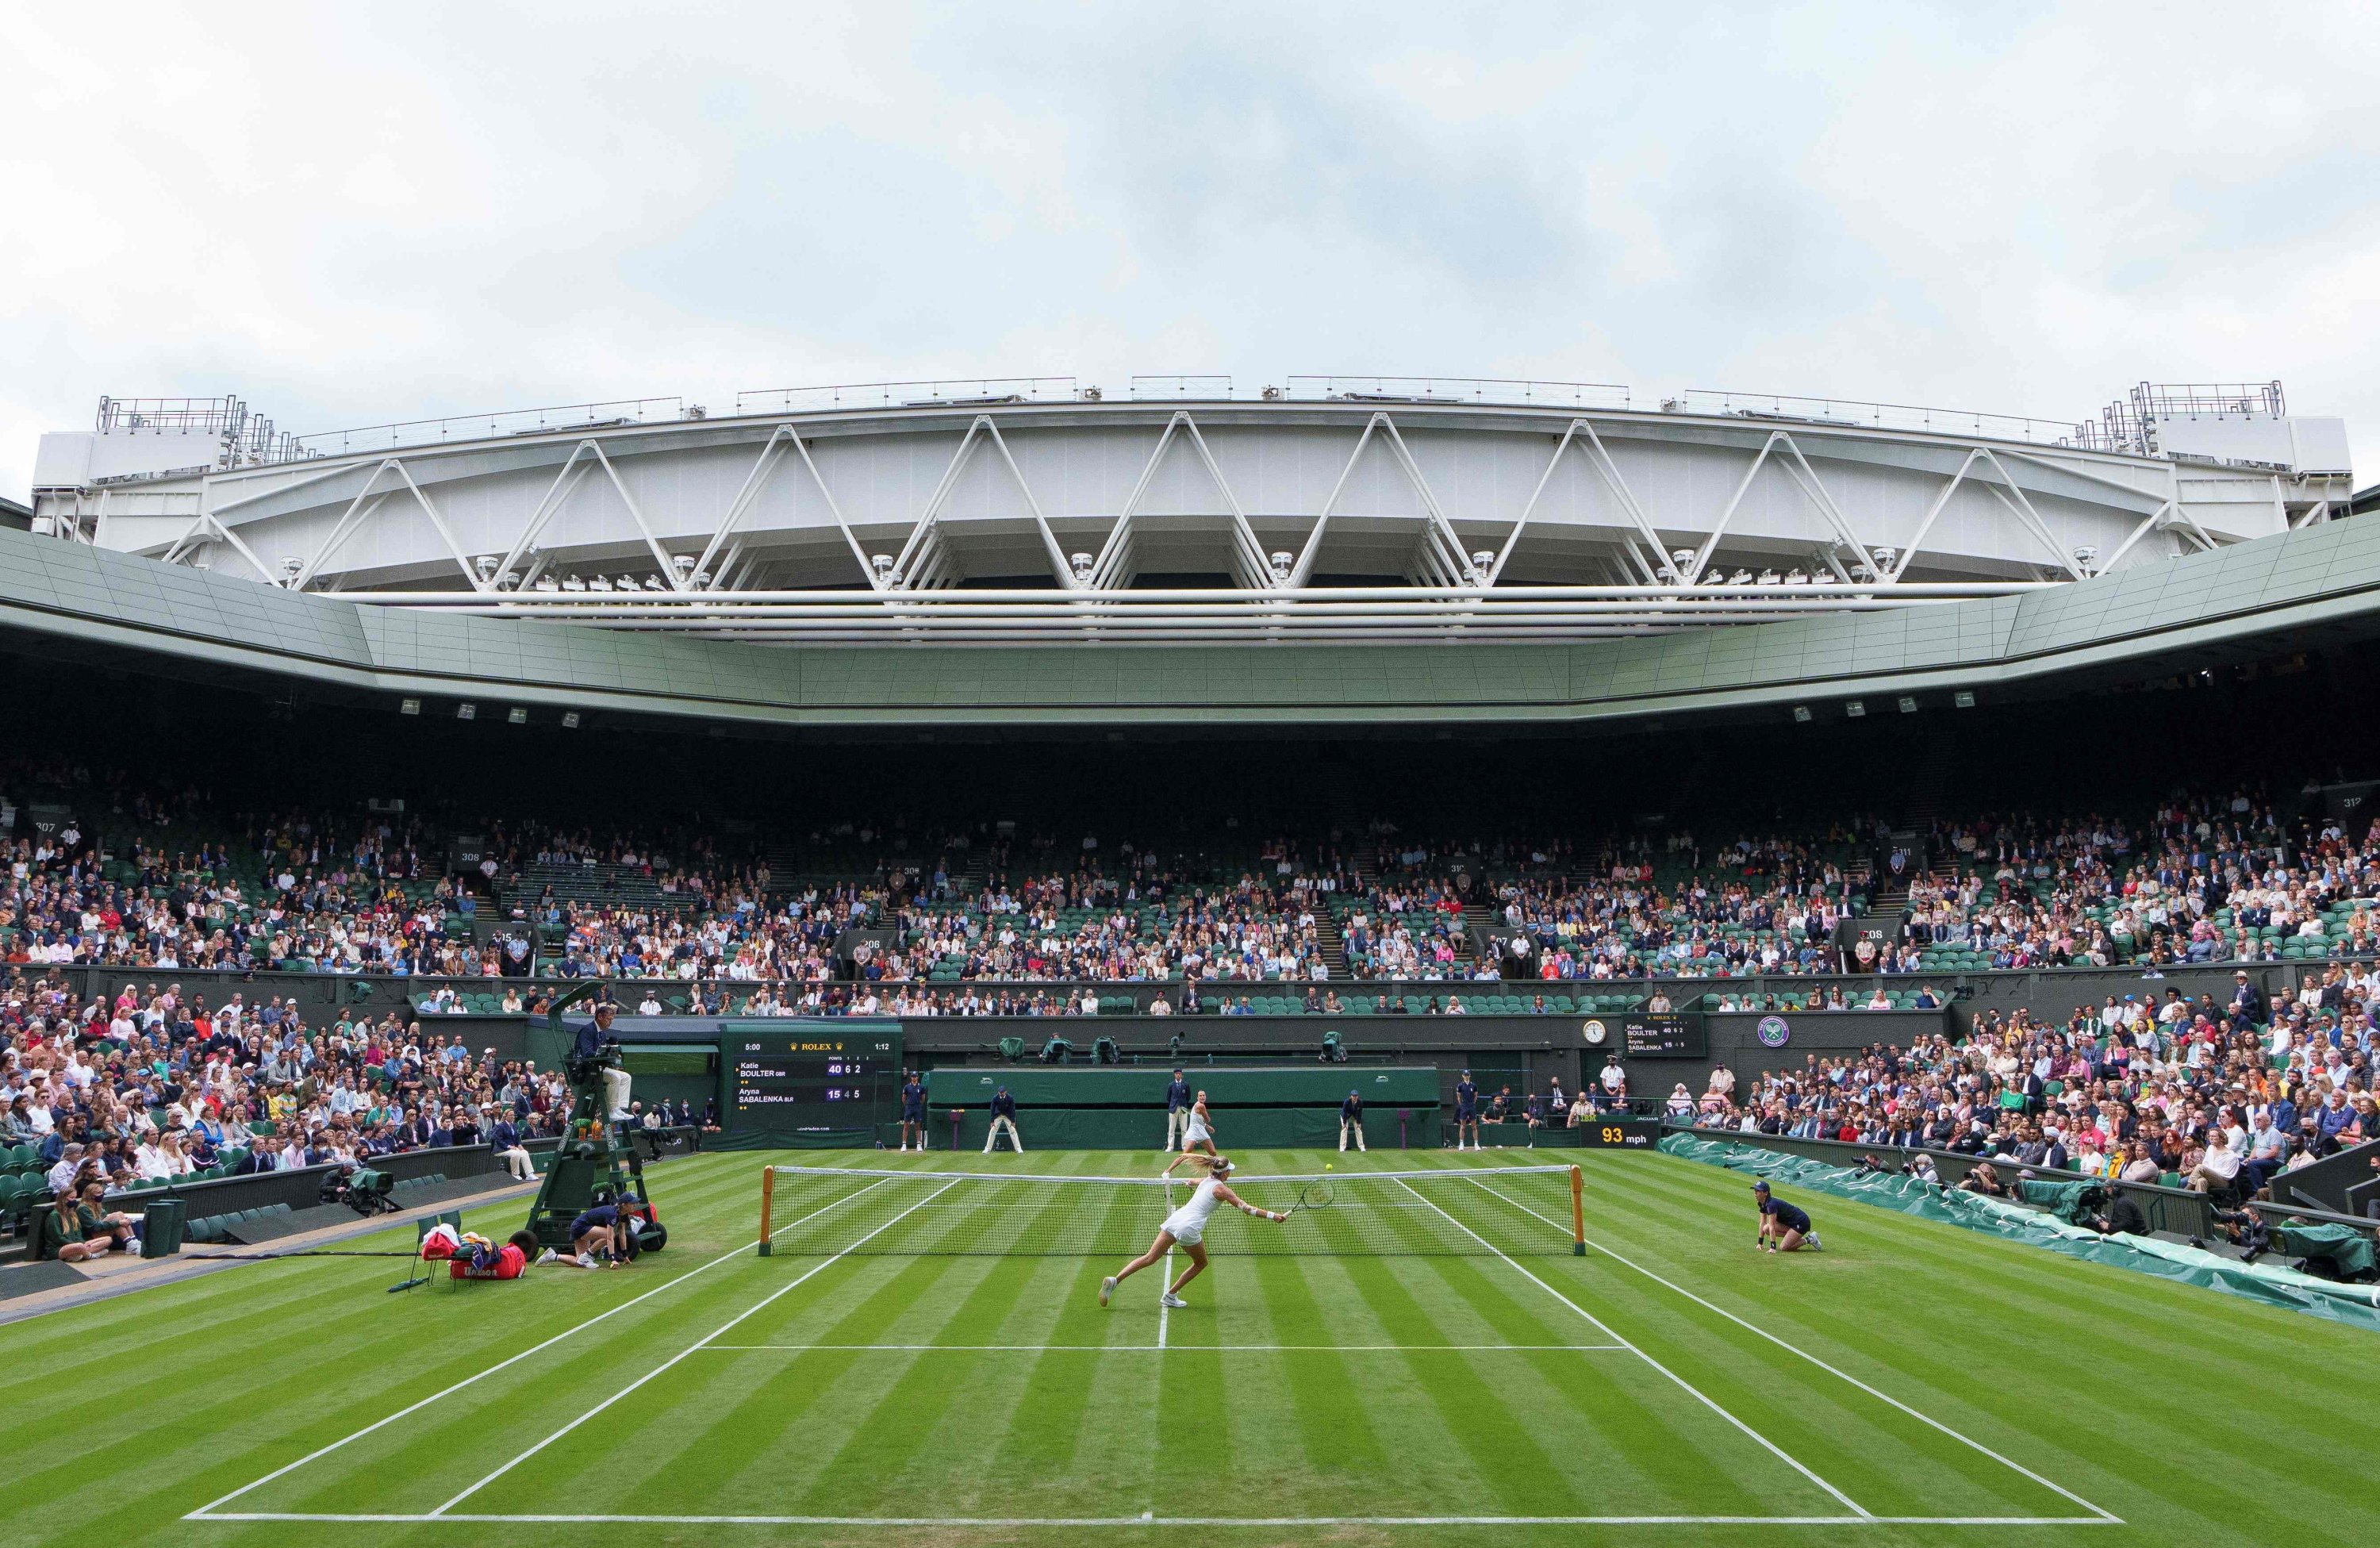 Pemandangan umum permainan di Centre Court selama Kejuaraan Wimbledon 2021, London, Inggris, 30 Juni 2021. (AFP Photo)